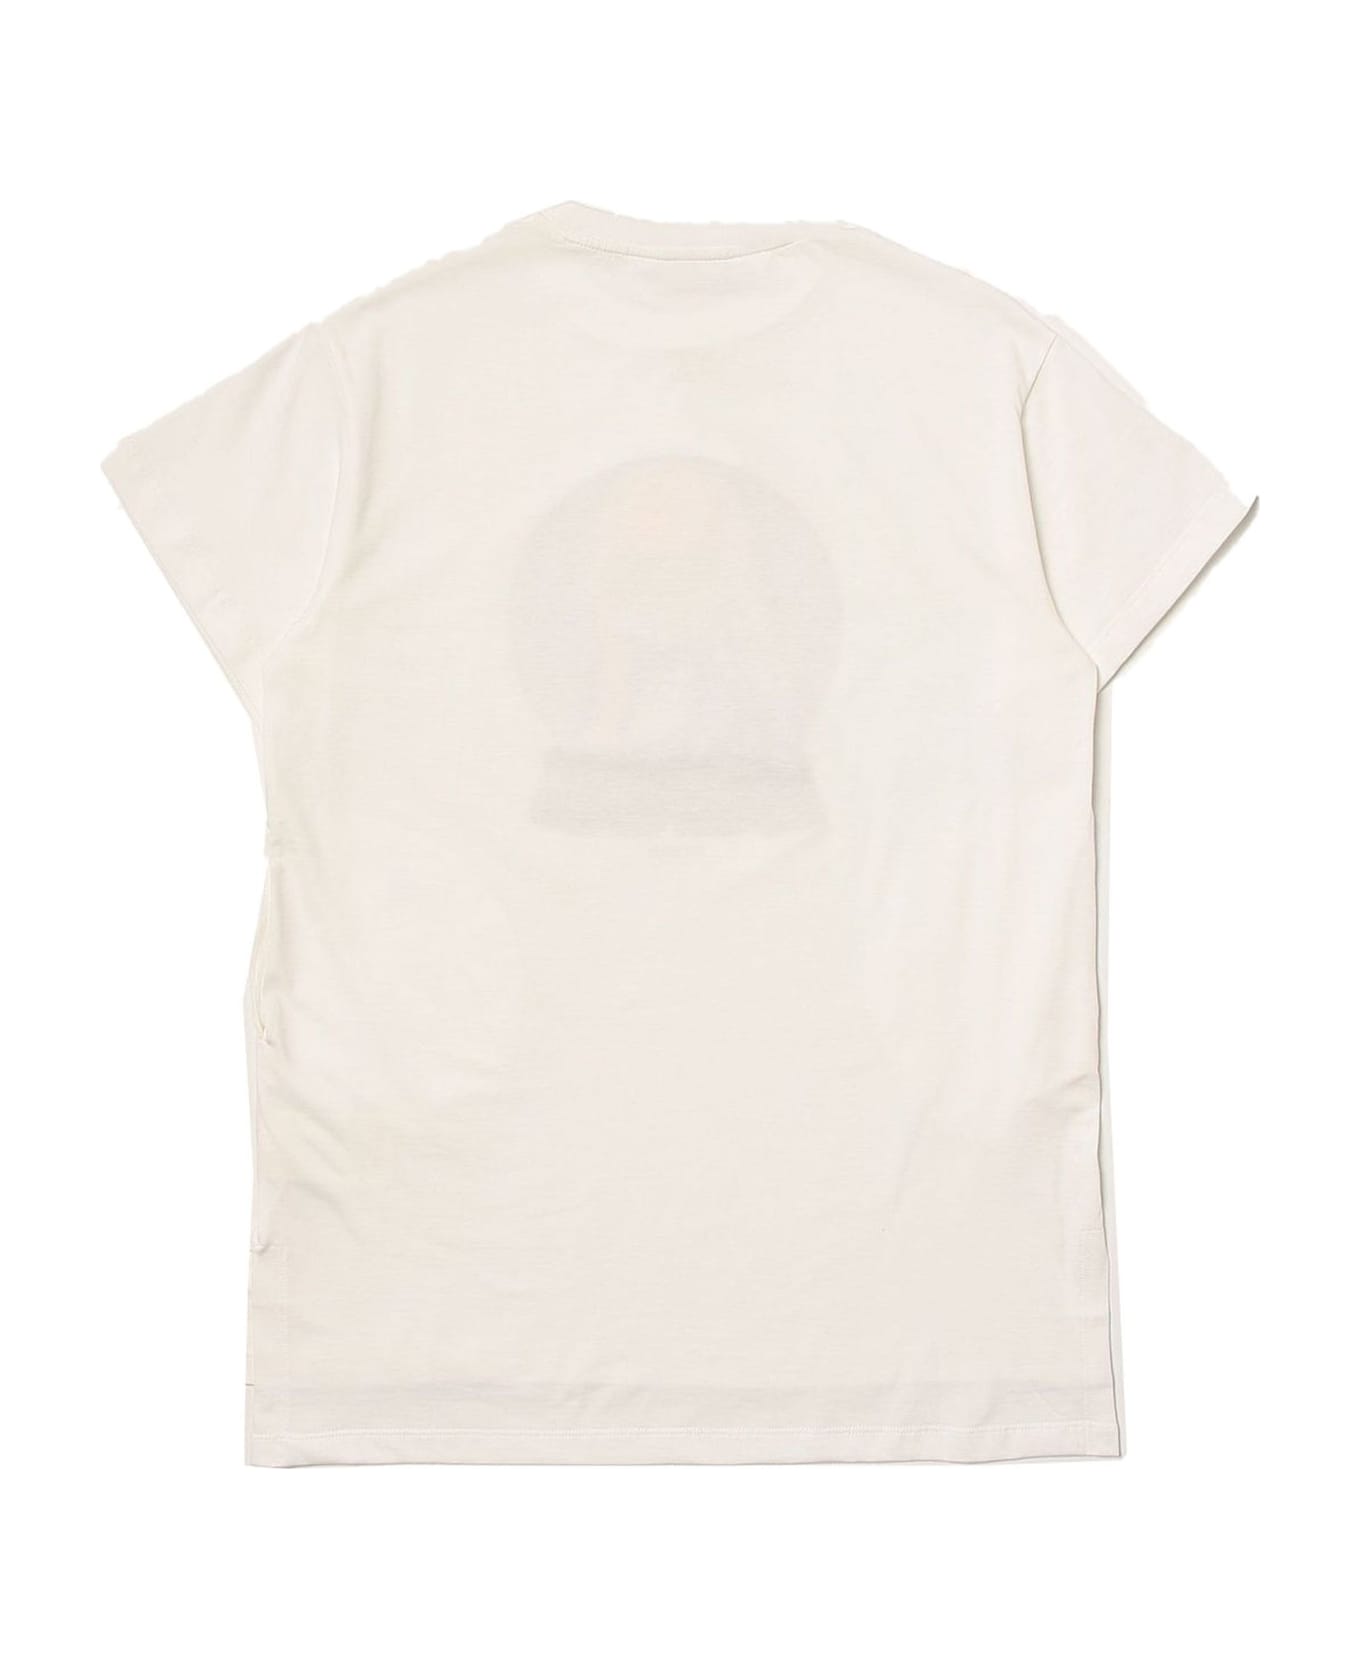 Fendi White Cotton Tshirt - Bianco